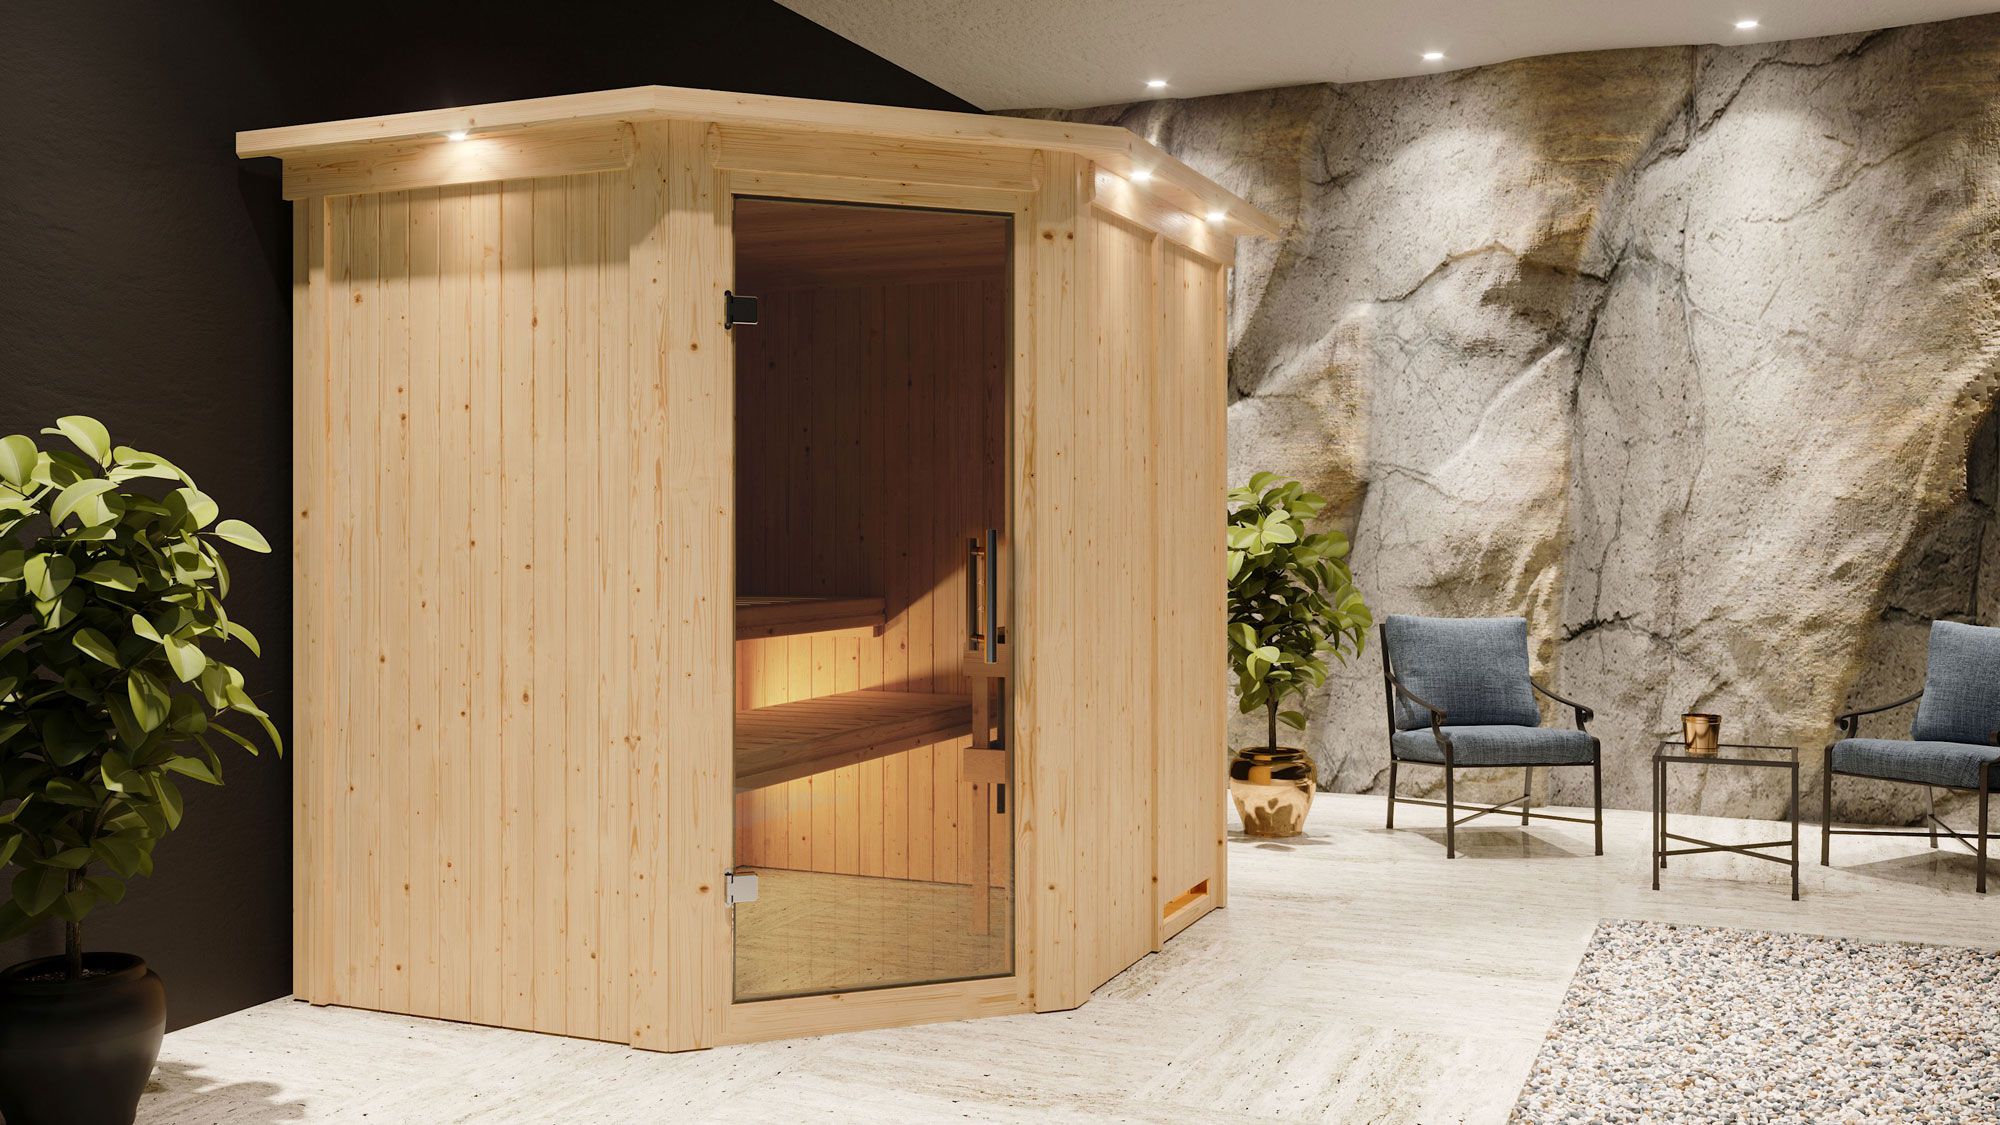 Askjell" sauna met grafietkleurige deur en rand - Kleur: Naturel - 210 x 184 x 202 cm (B x D x H)